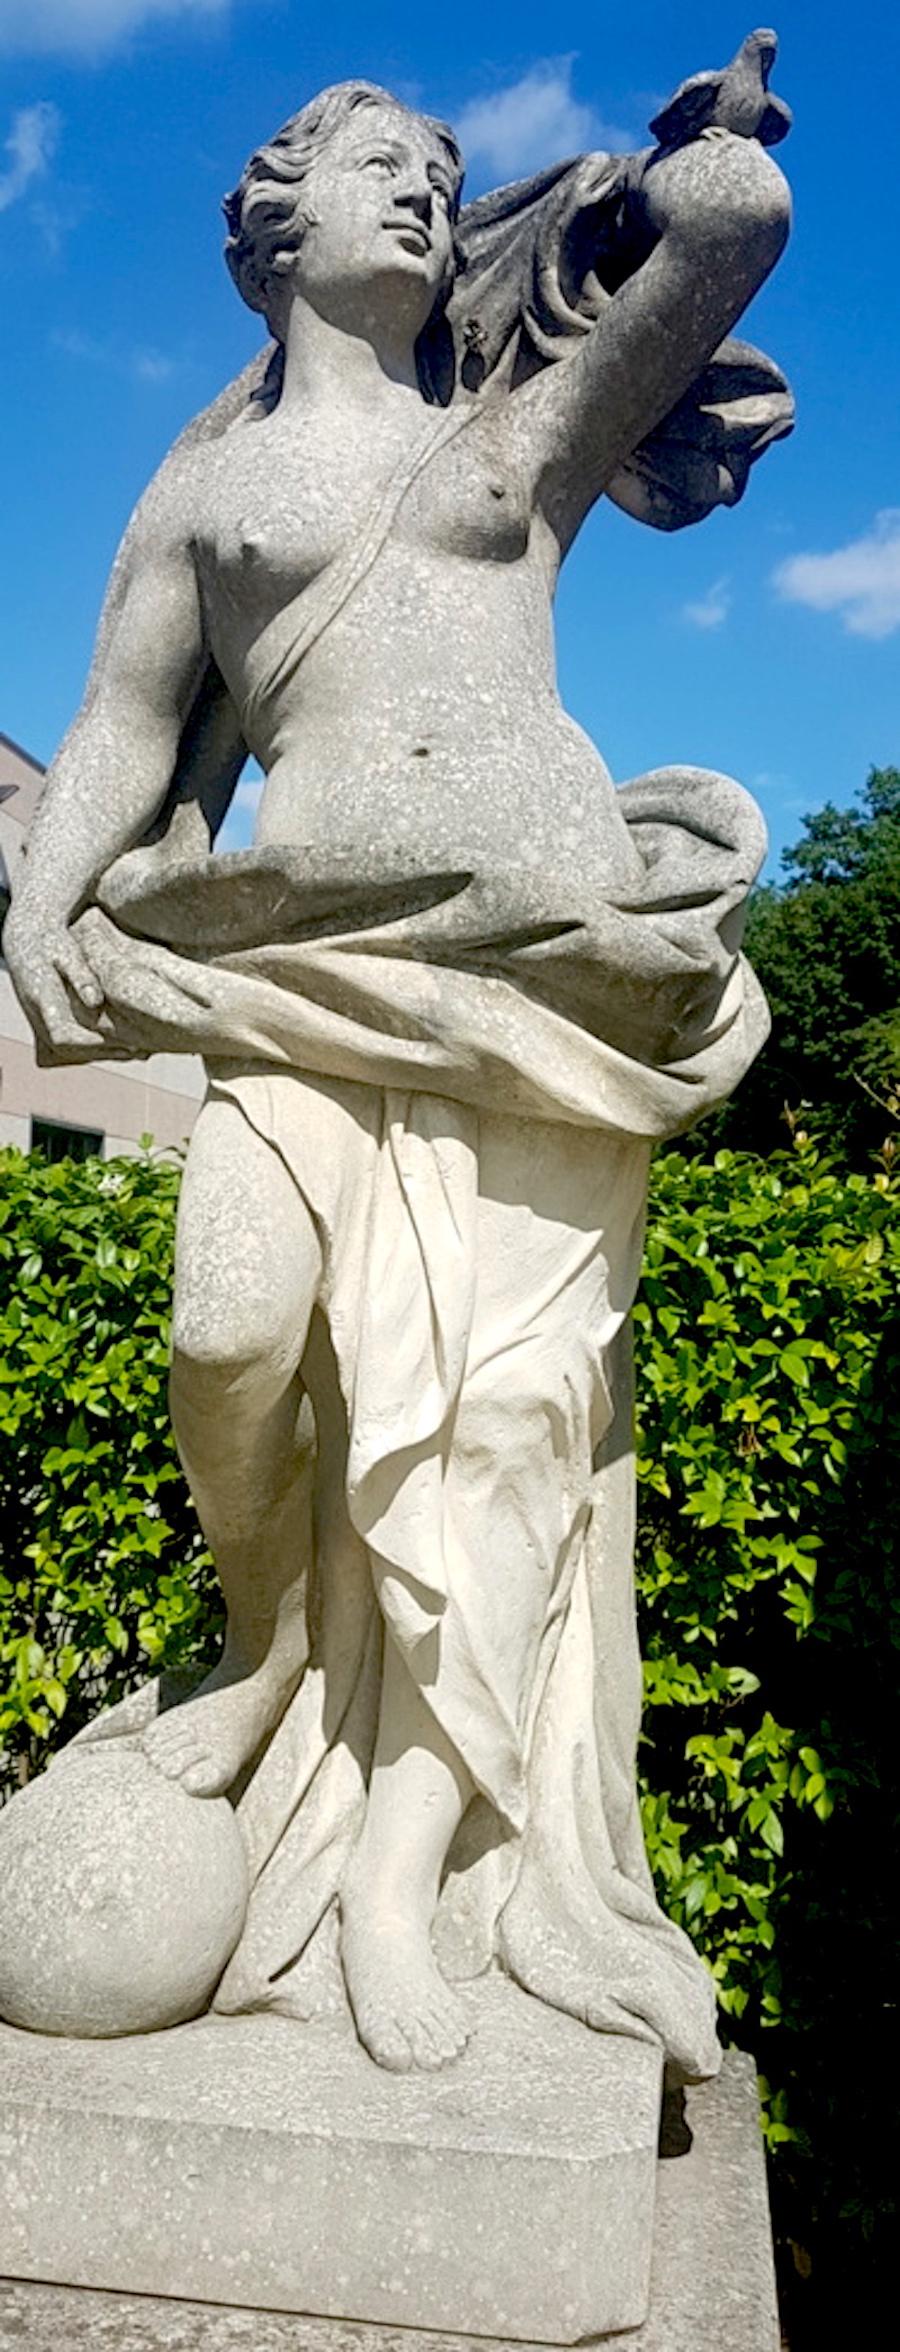 Limestone Italian Stone Garden Sculpture of Roman Mythological Subject Aria